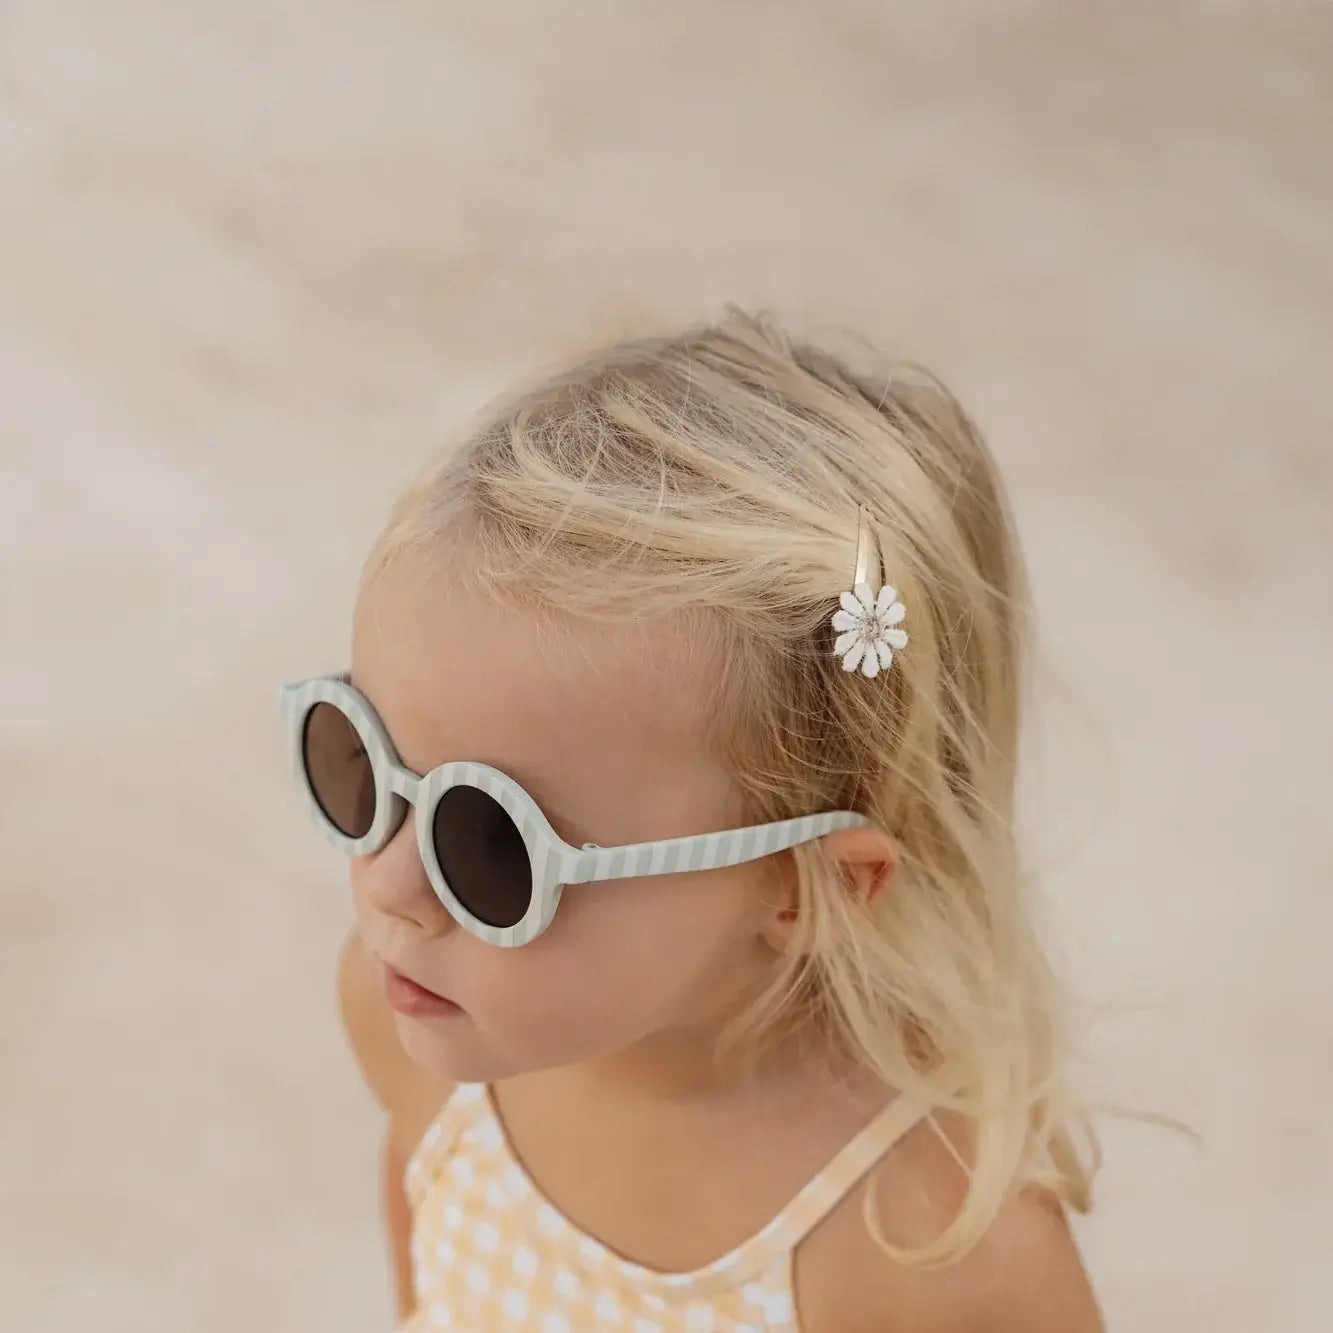 Óculos de sol criança Fresh Greens - Little Dutch Little Dutch Mini-Me - Baby & Kids Store